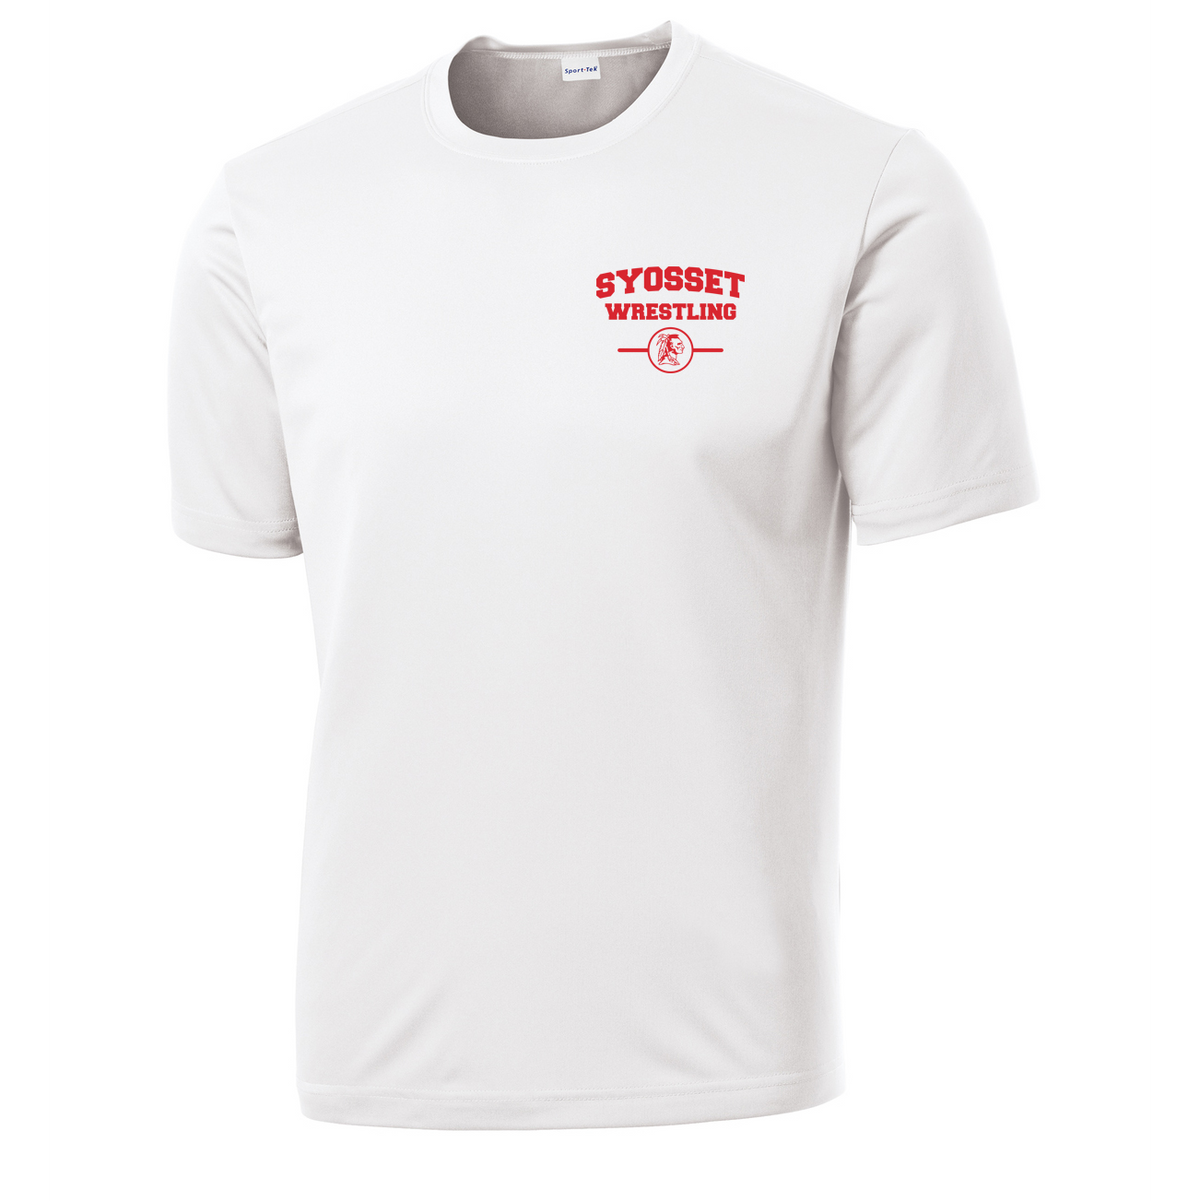 Syosset Wrestling Performance T-Shirt